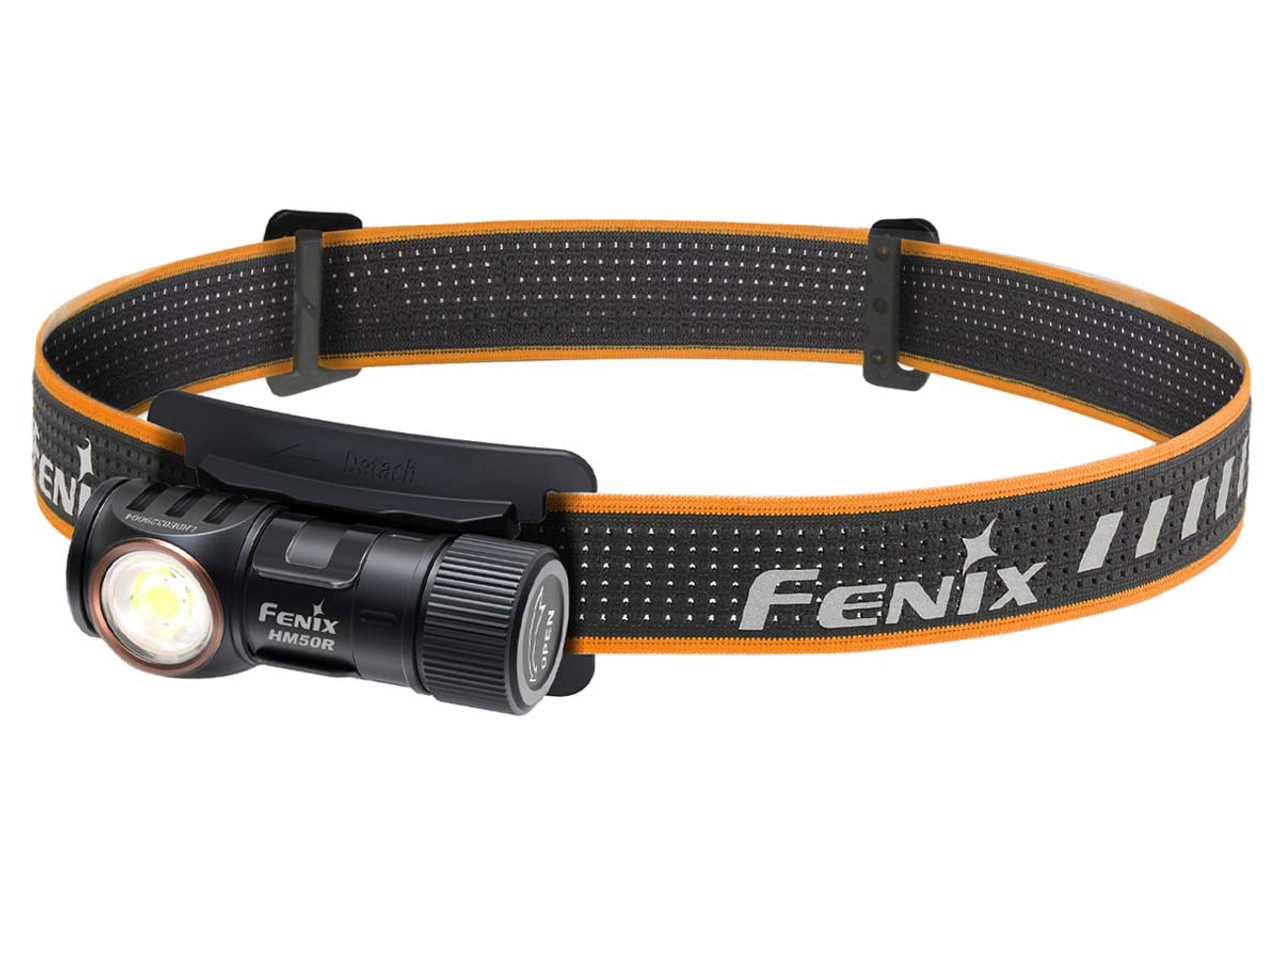 HM50R V2.0 - Fenix 700 Lumen Rechargeable LED Headlamp